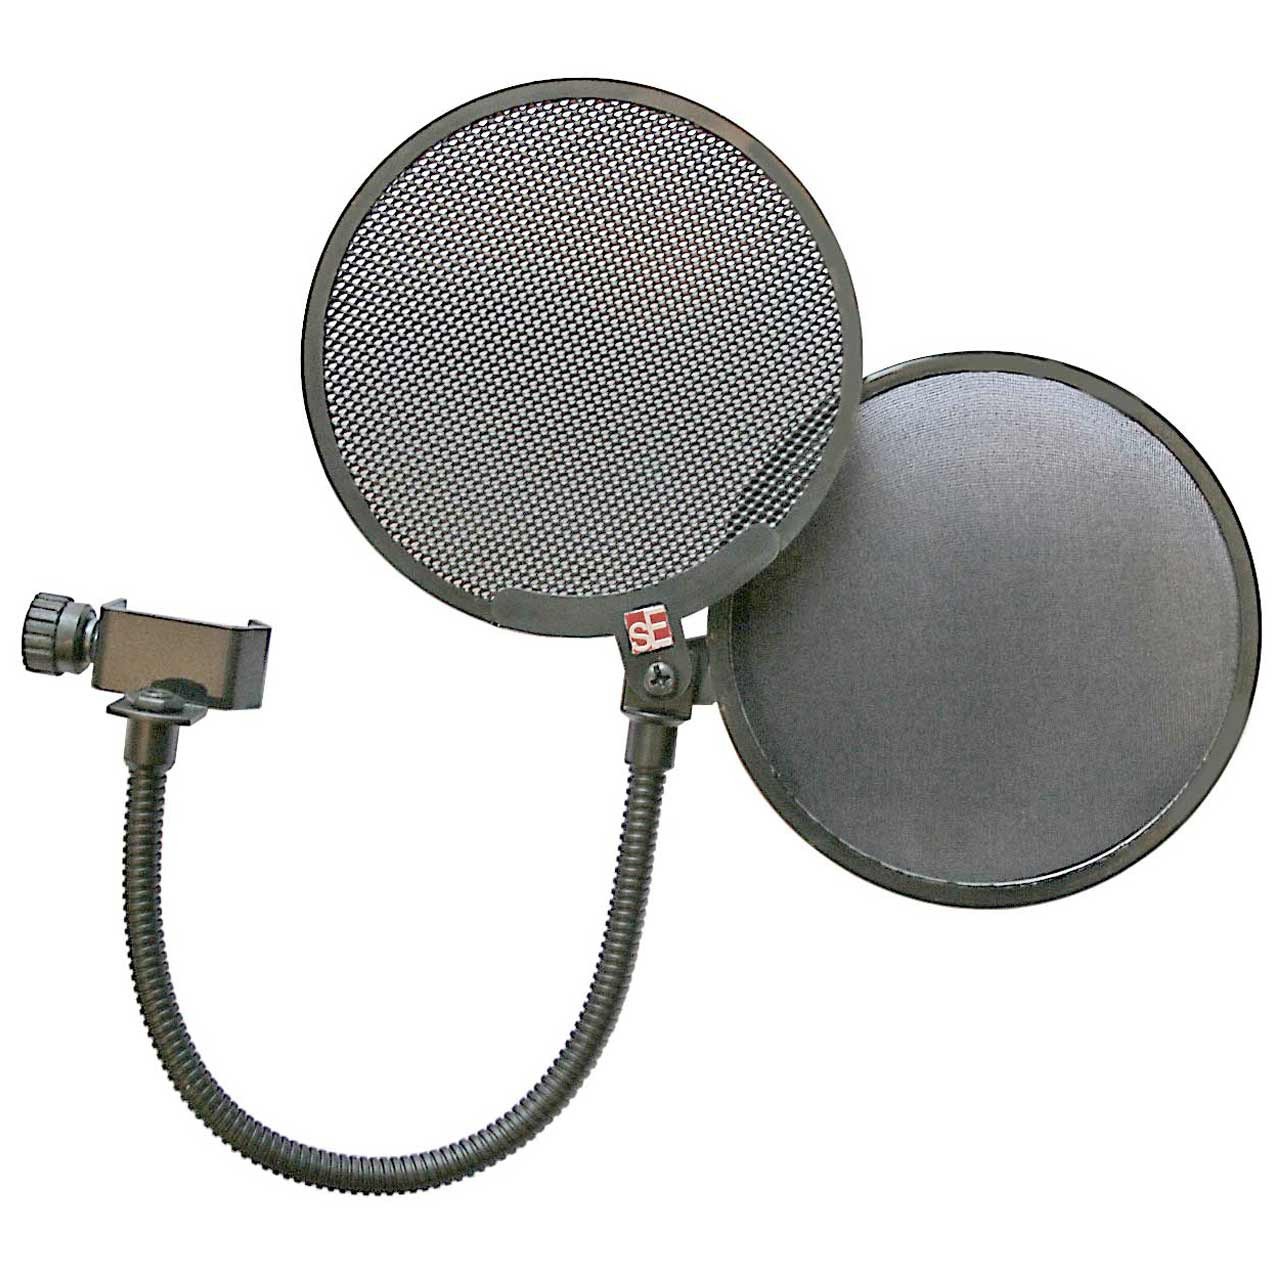 Microphone Accessories - SE Electronics Dual Pro Pop Screen - Microphone Pop Filter Shield